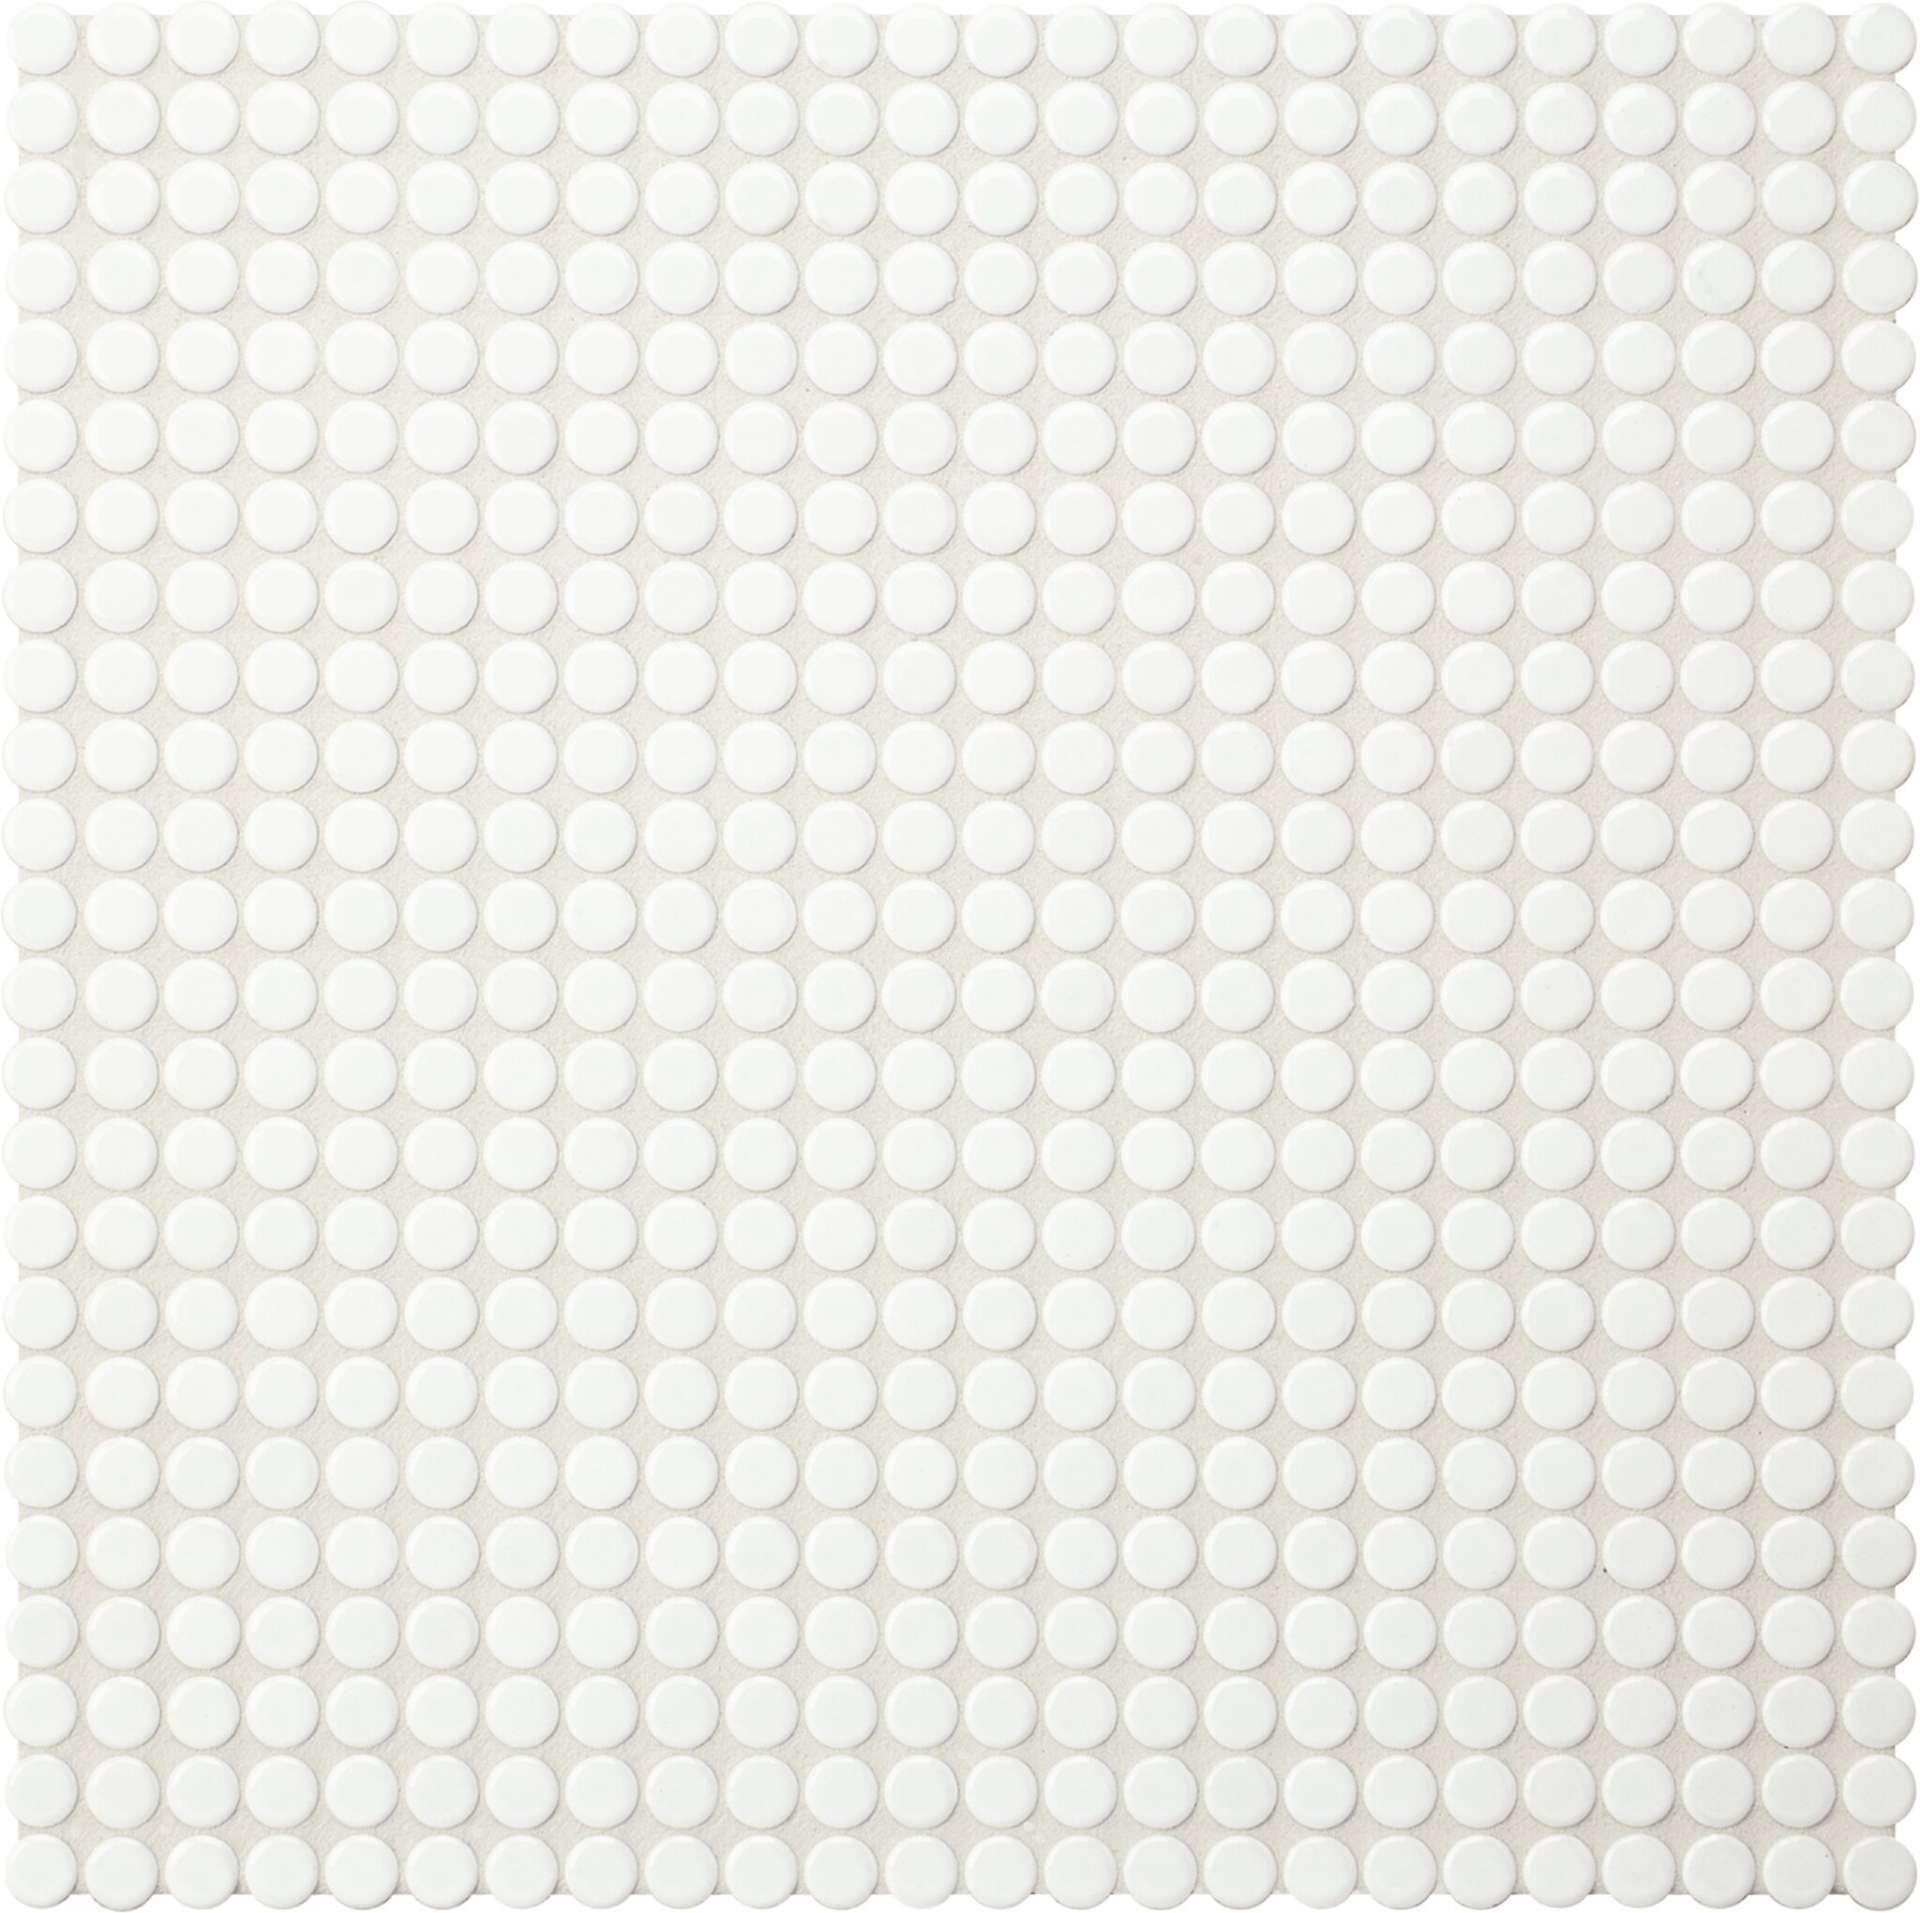 Мозаика Jasba Loop Arktiswei 40000H-44, цвет белый, поверхность глянцевая, круг и овал, 316x316